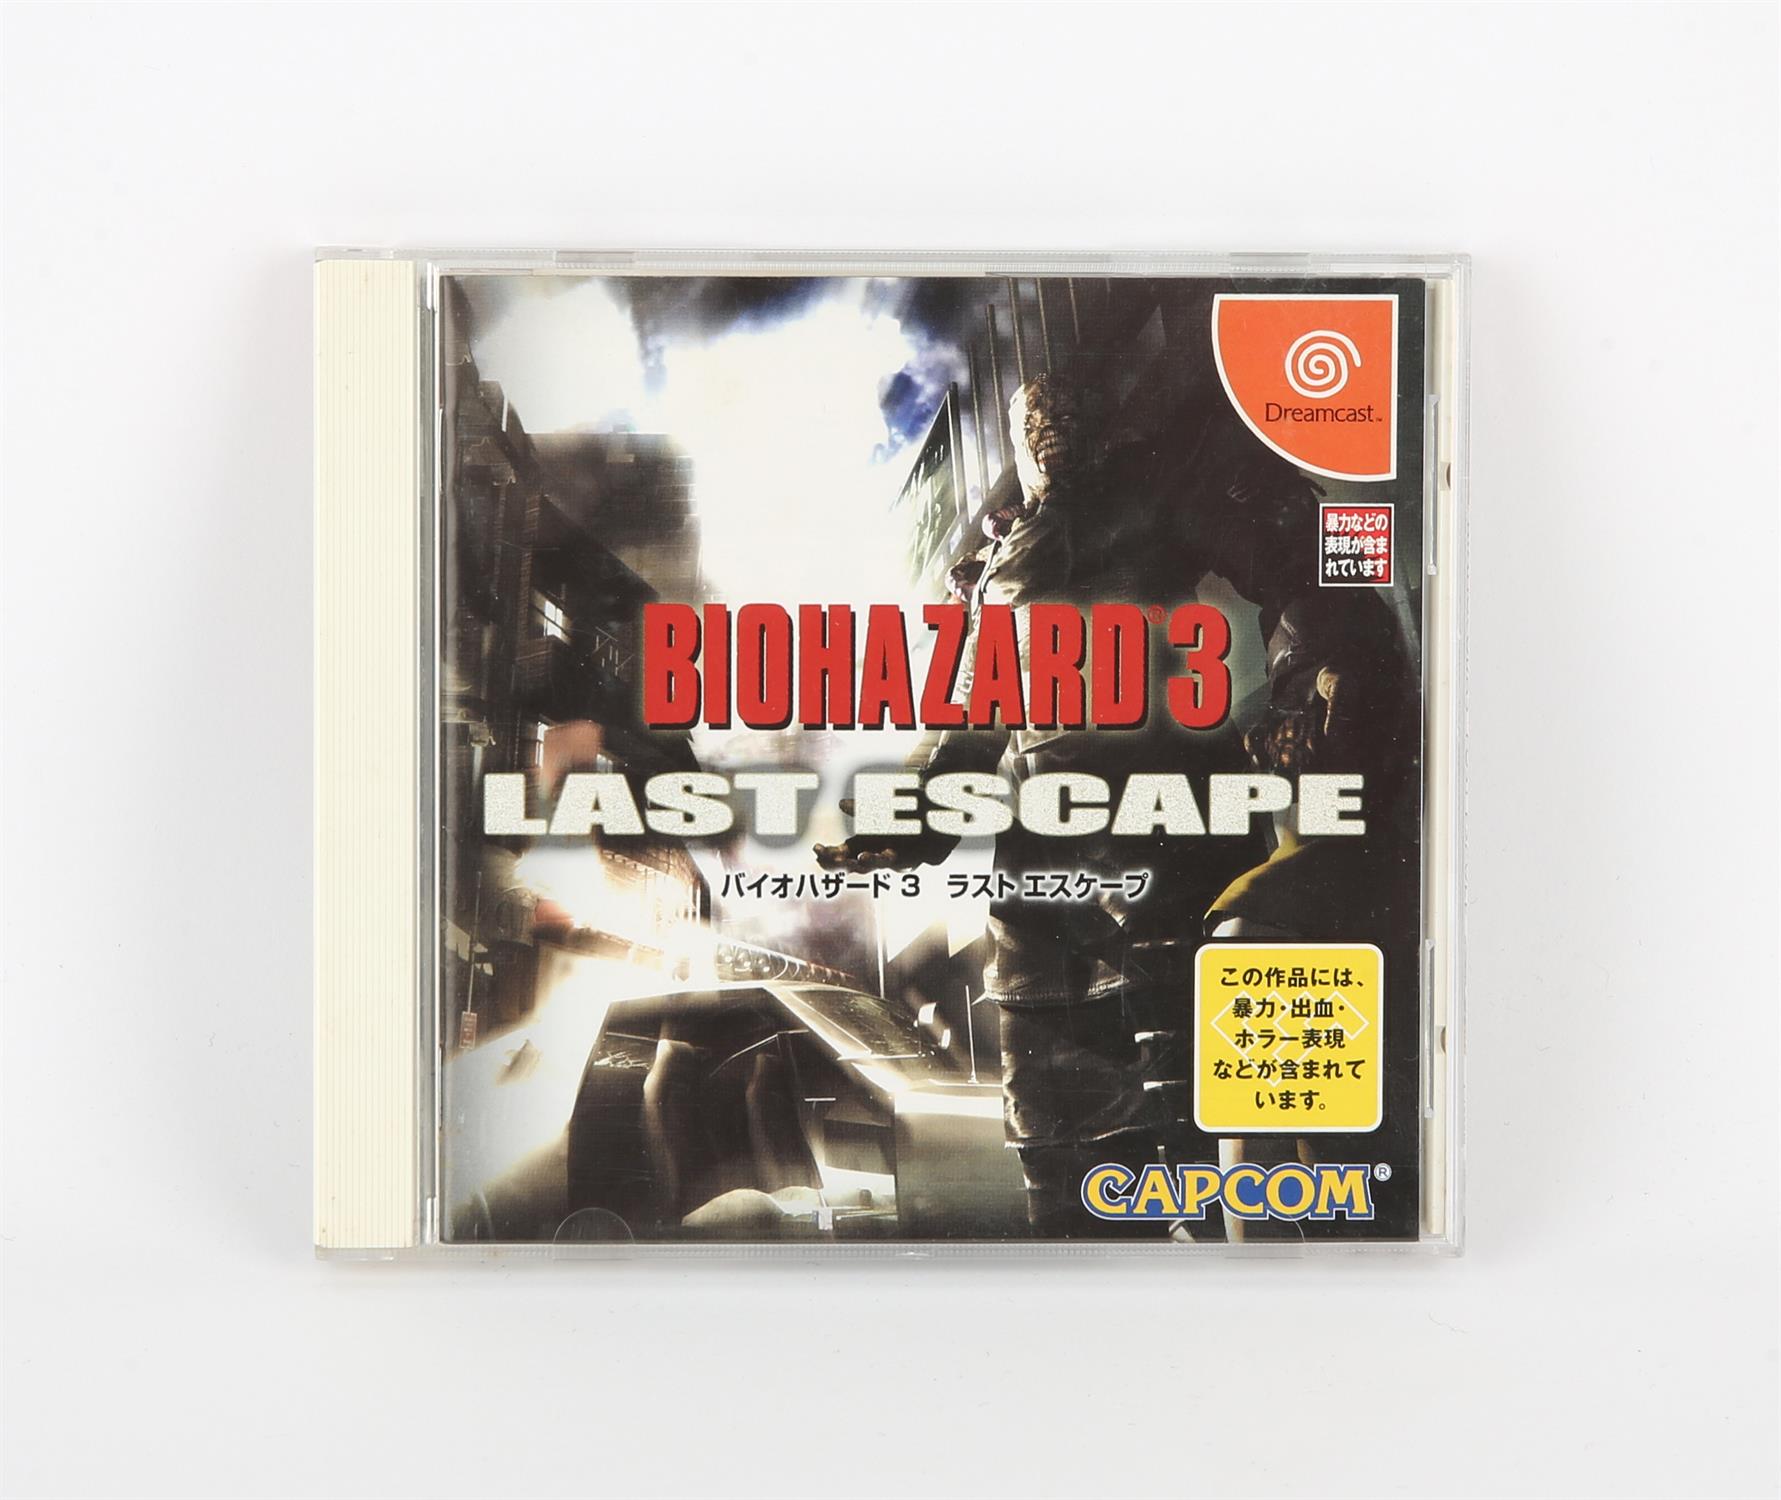 Sega Dreamcast Biohazard 3: Last Escape game (NTSC-J) with original spine card inside box Game is